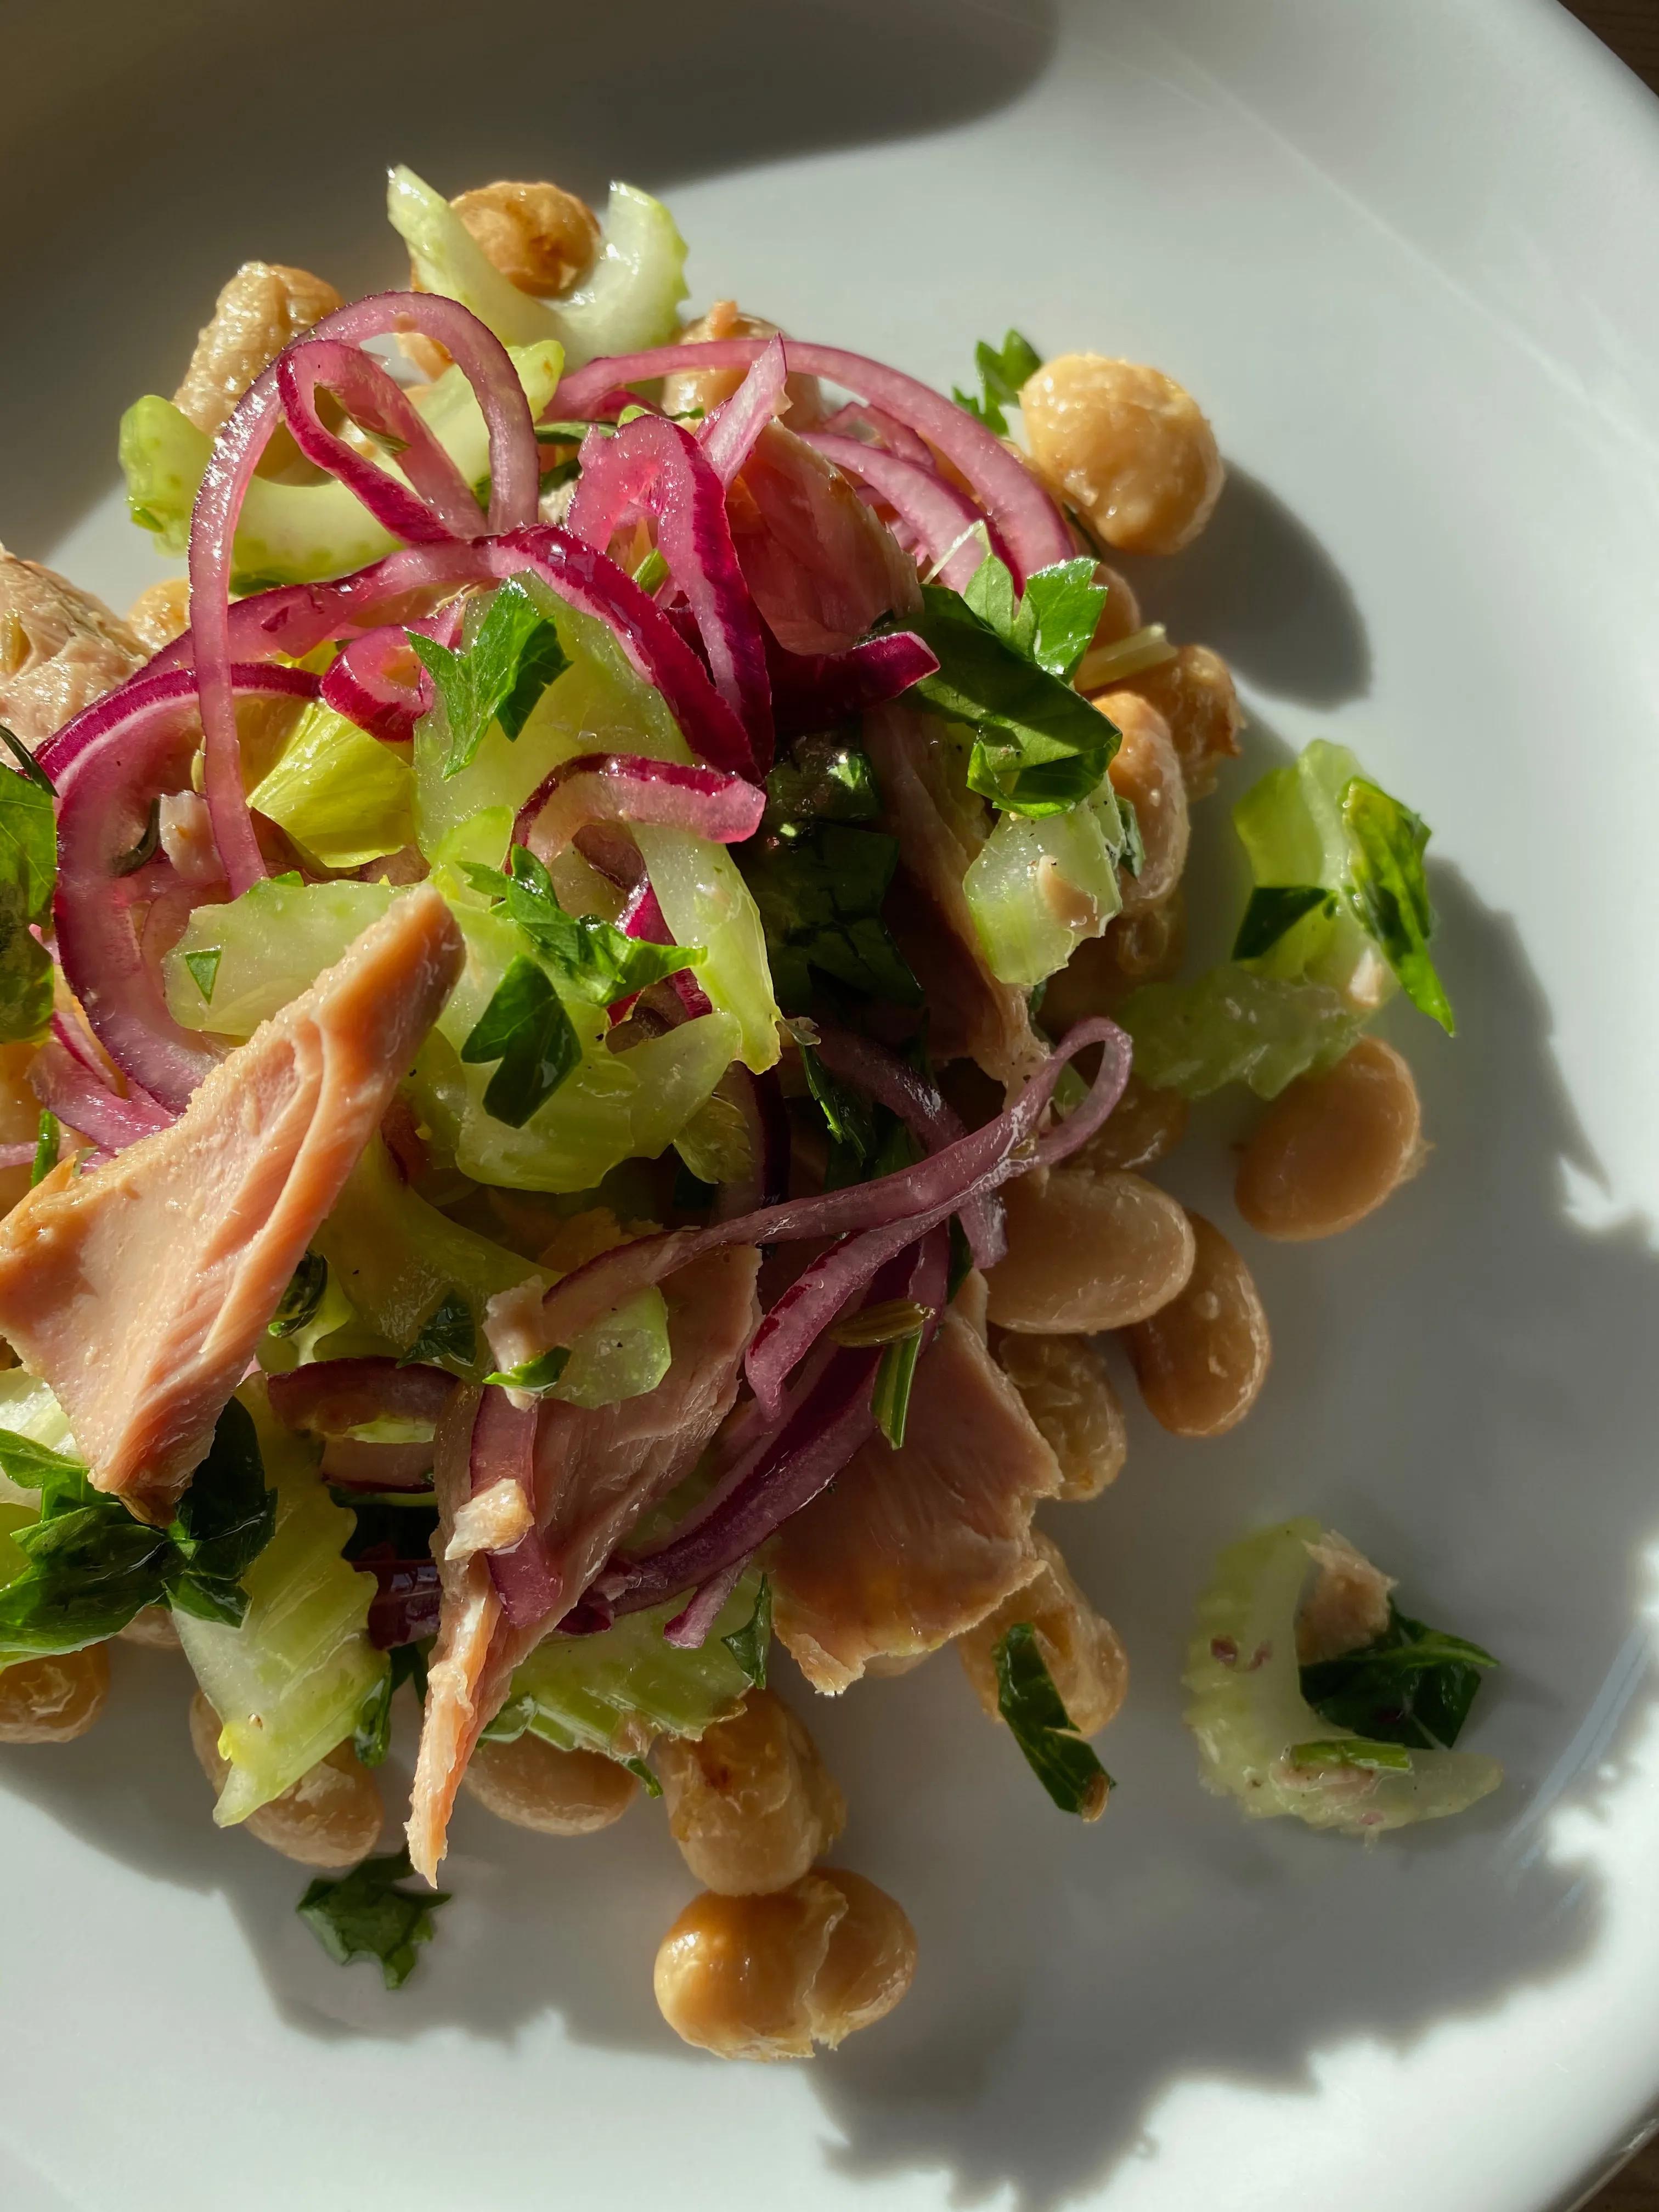 Give me 5: Bohnen-Sellerie-Salat mit Thunfisch